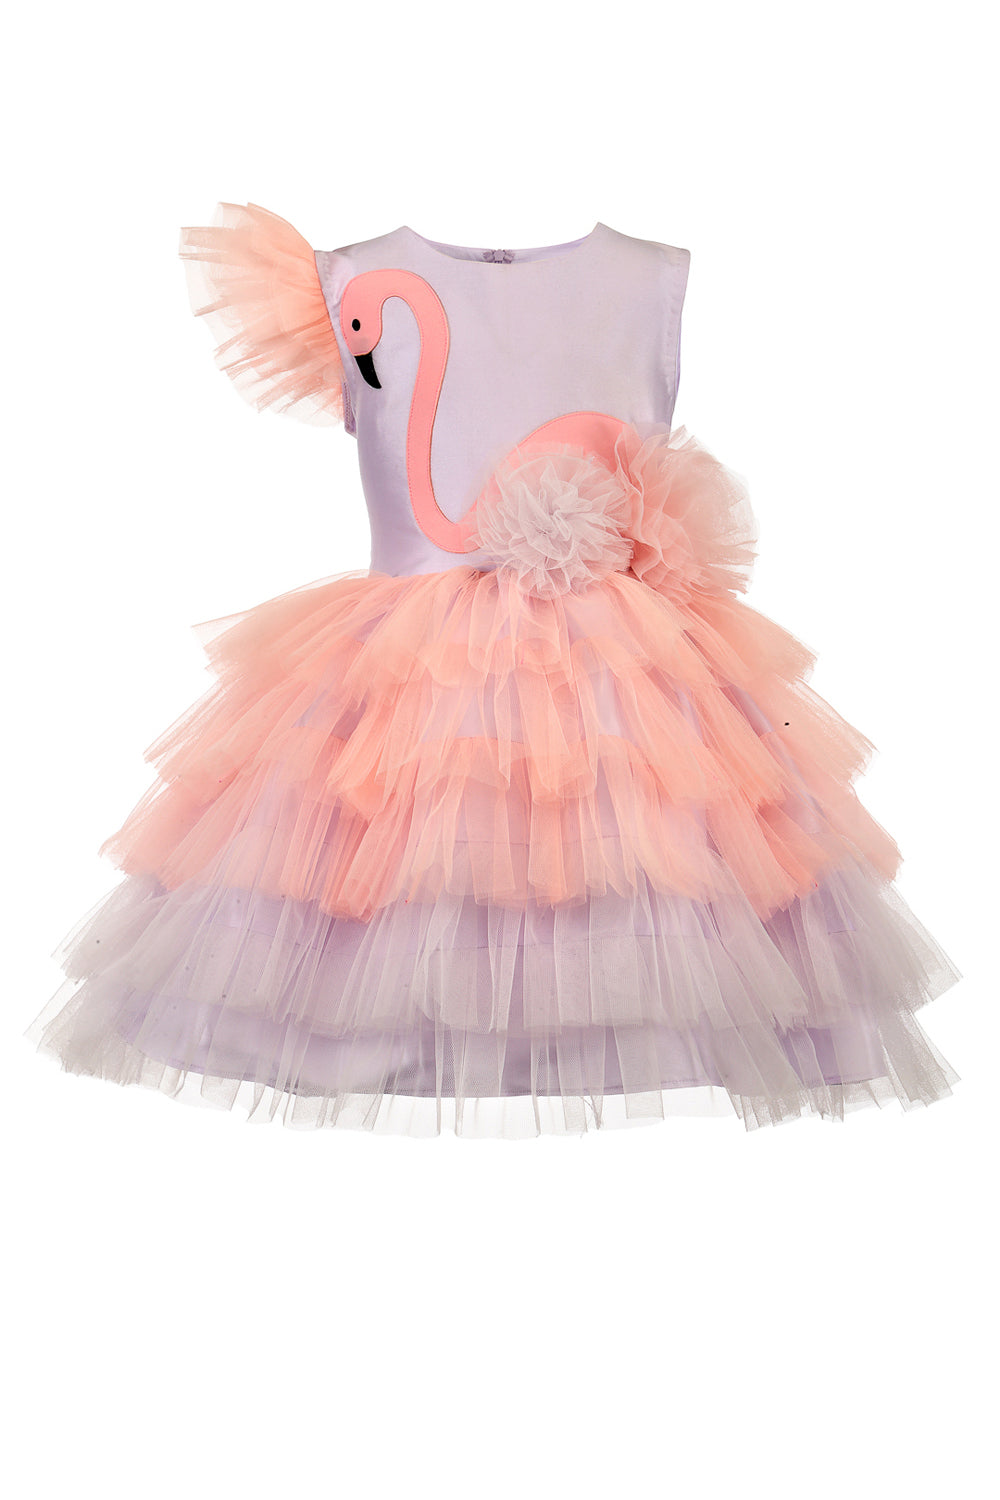 Candy Flamingo Dress